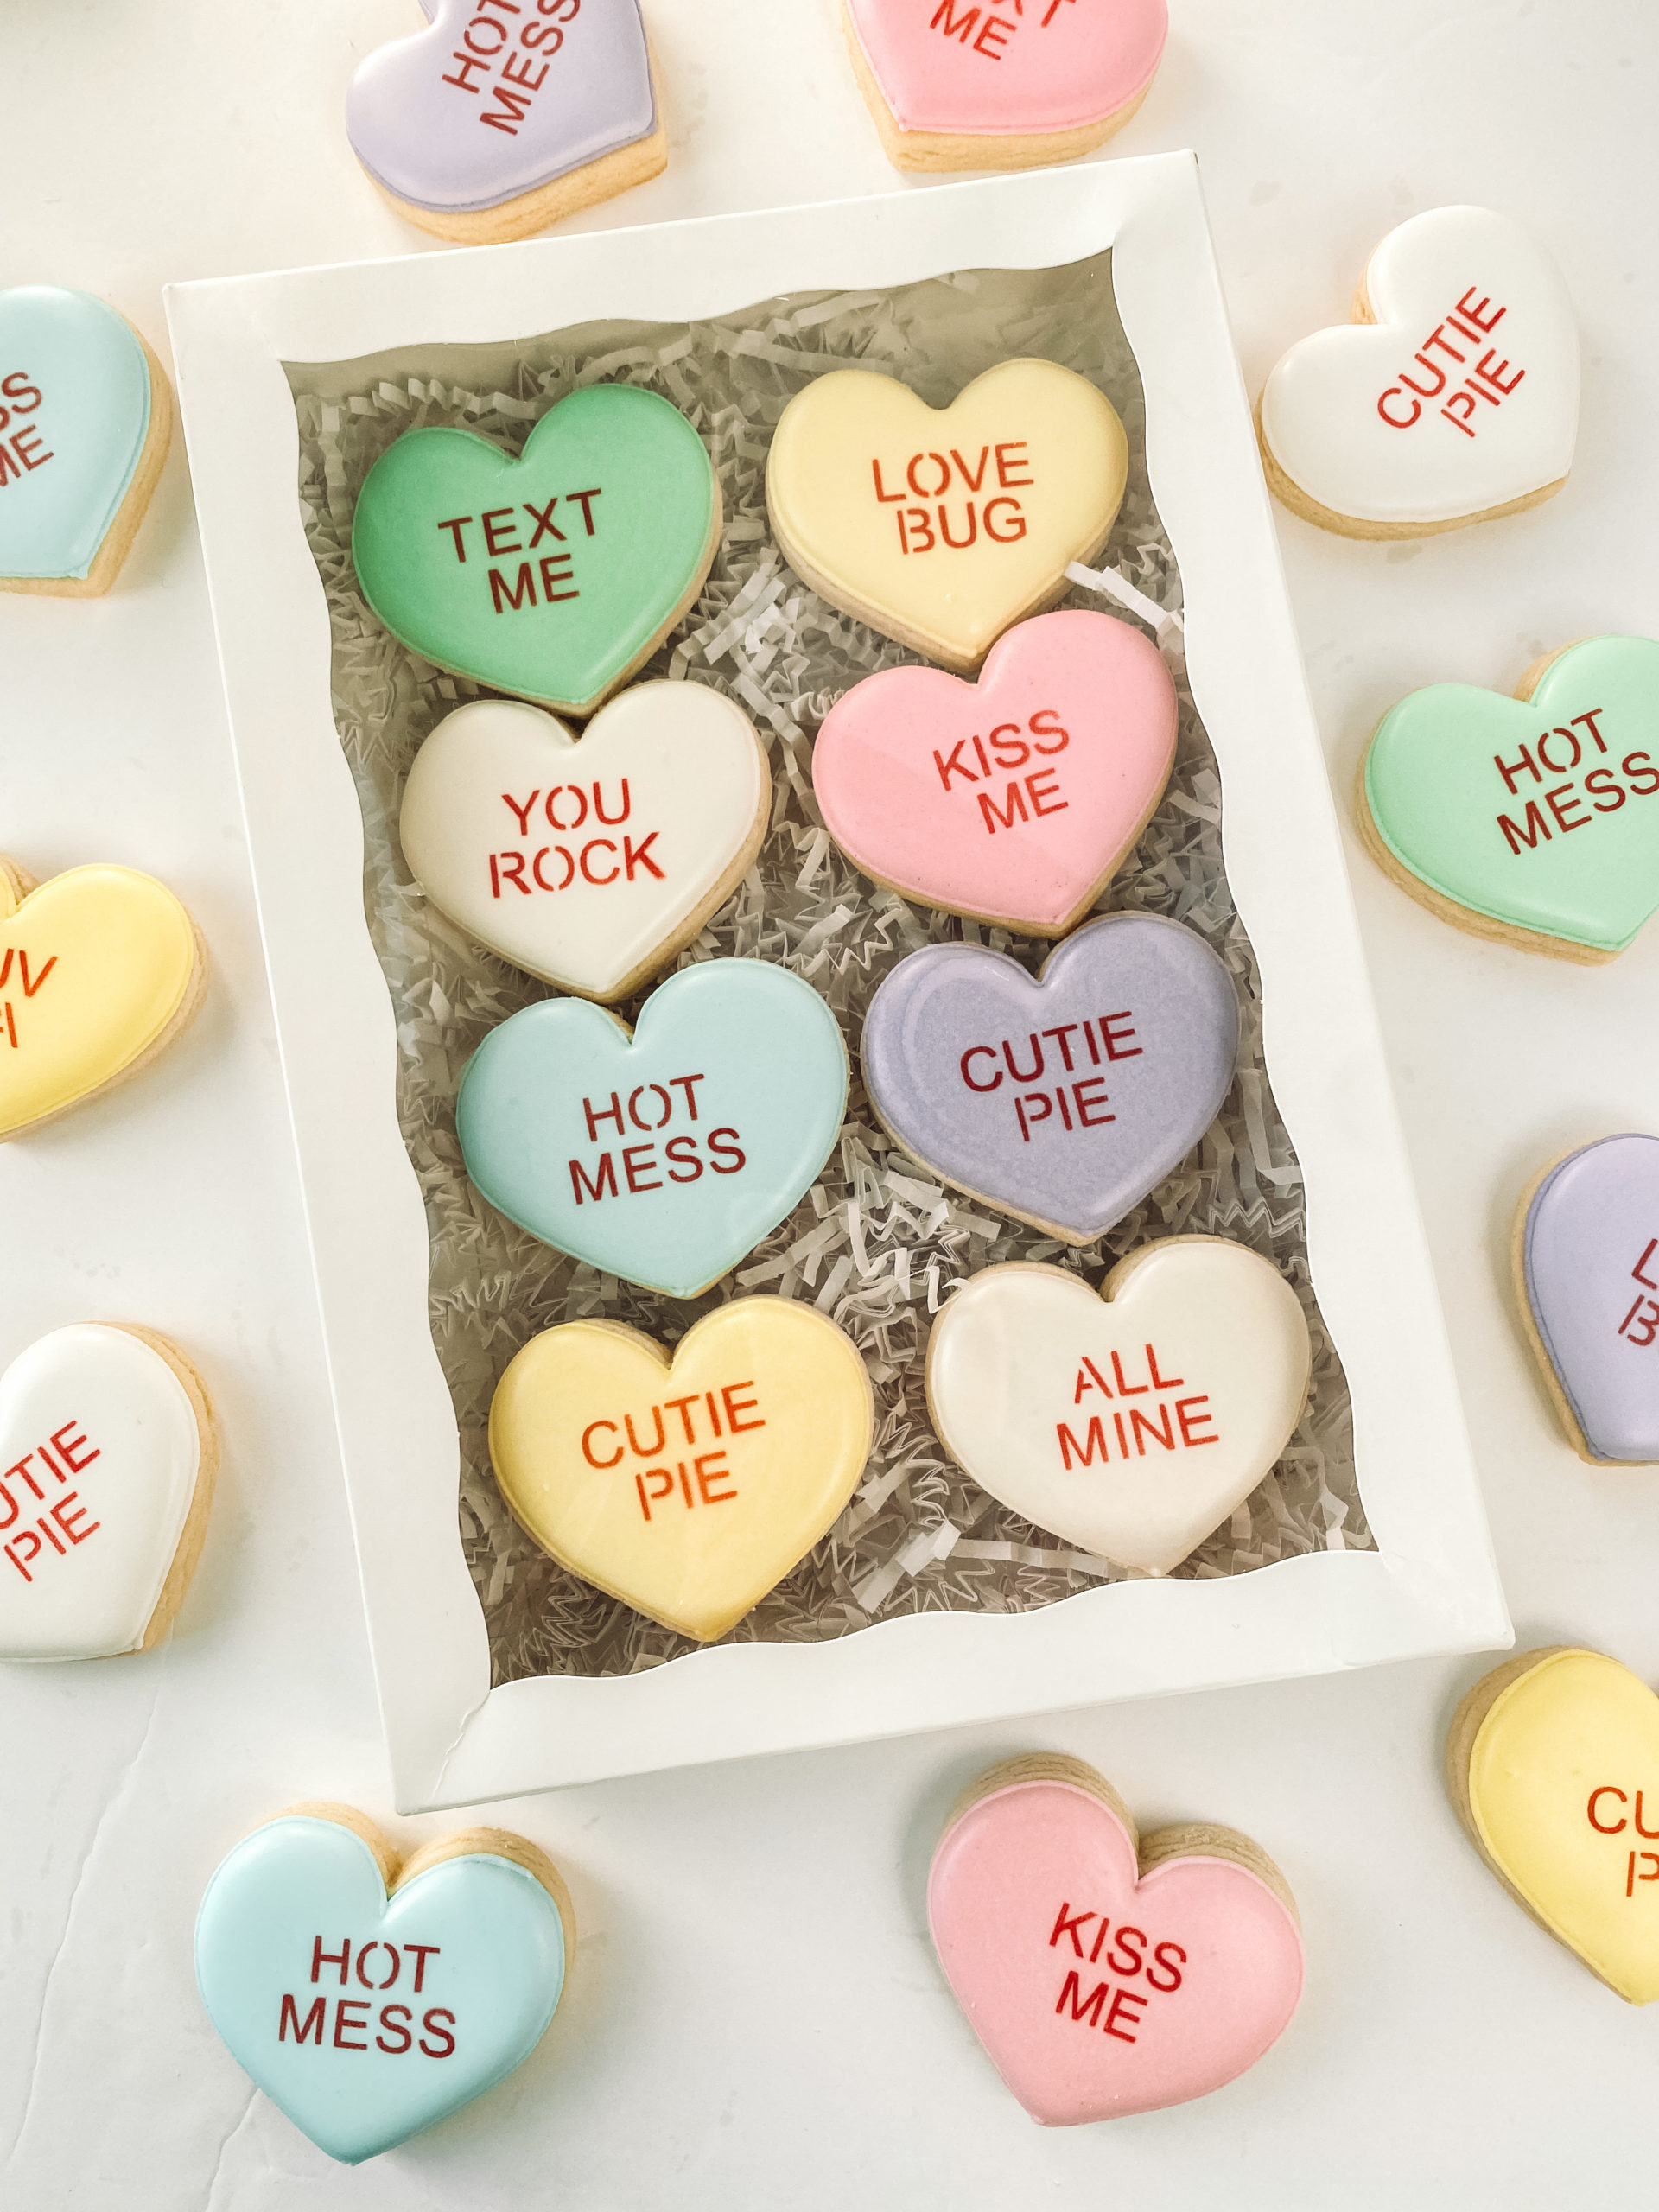 How To Make Valentine's Conversation Heart Cookies - Summer's